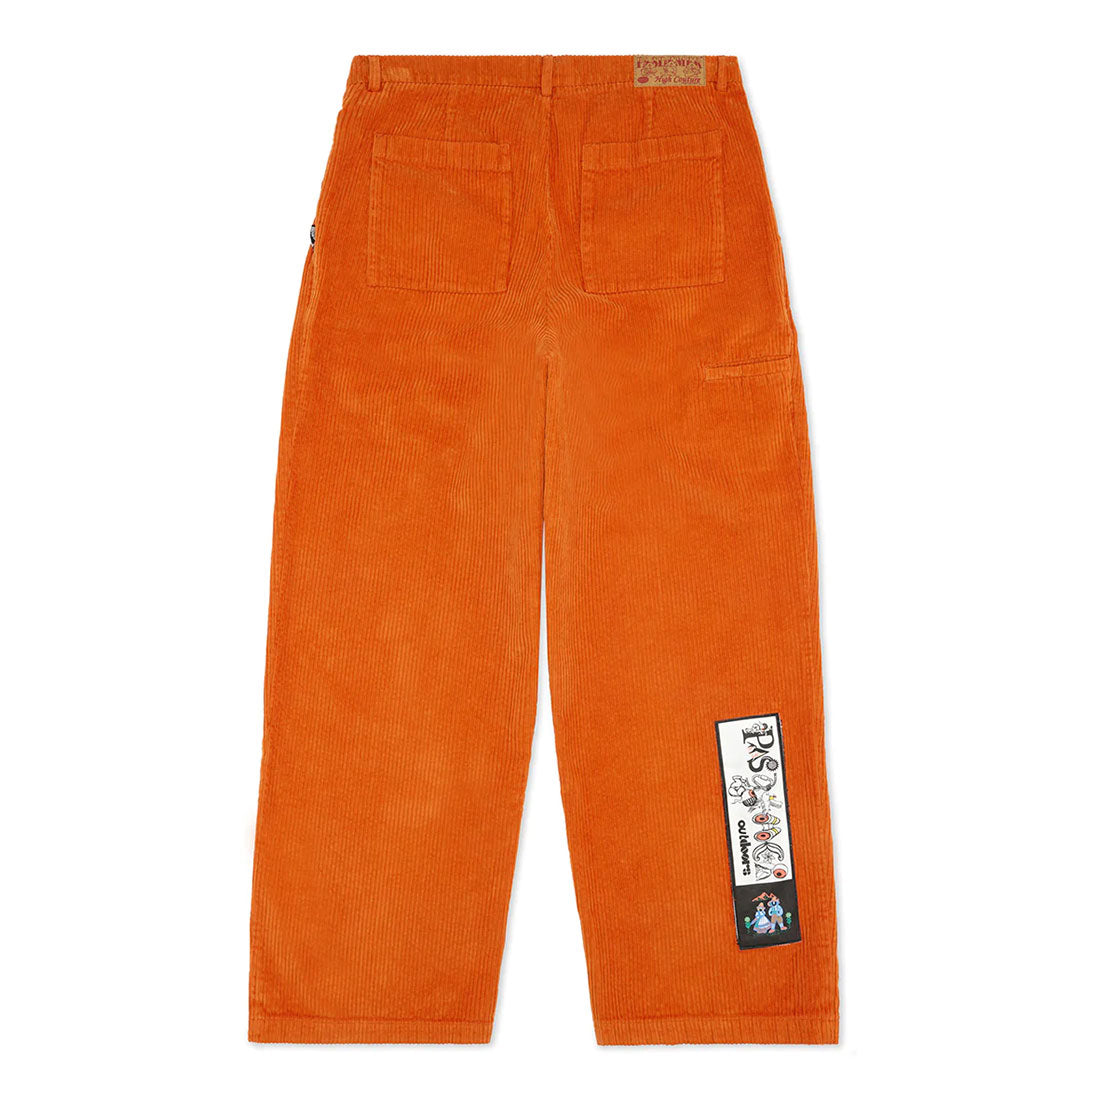 Pas De mer velvet trousers - Outdoors pants - Orange